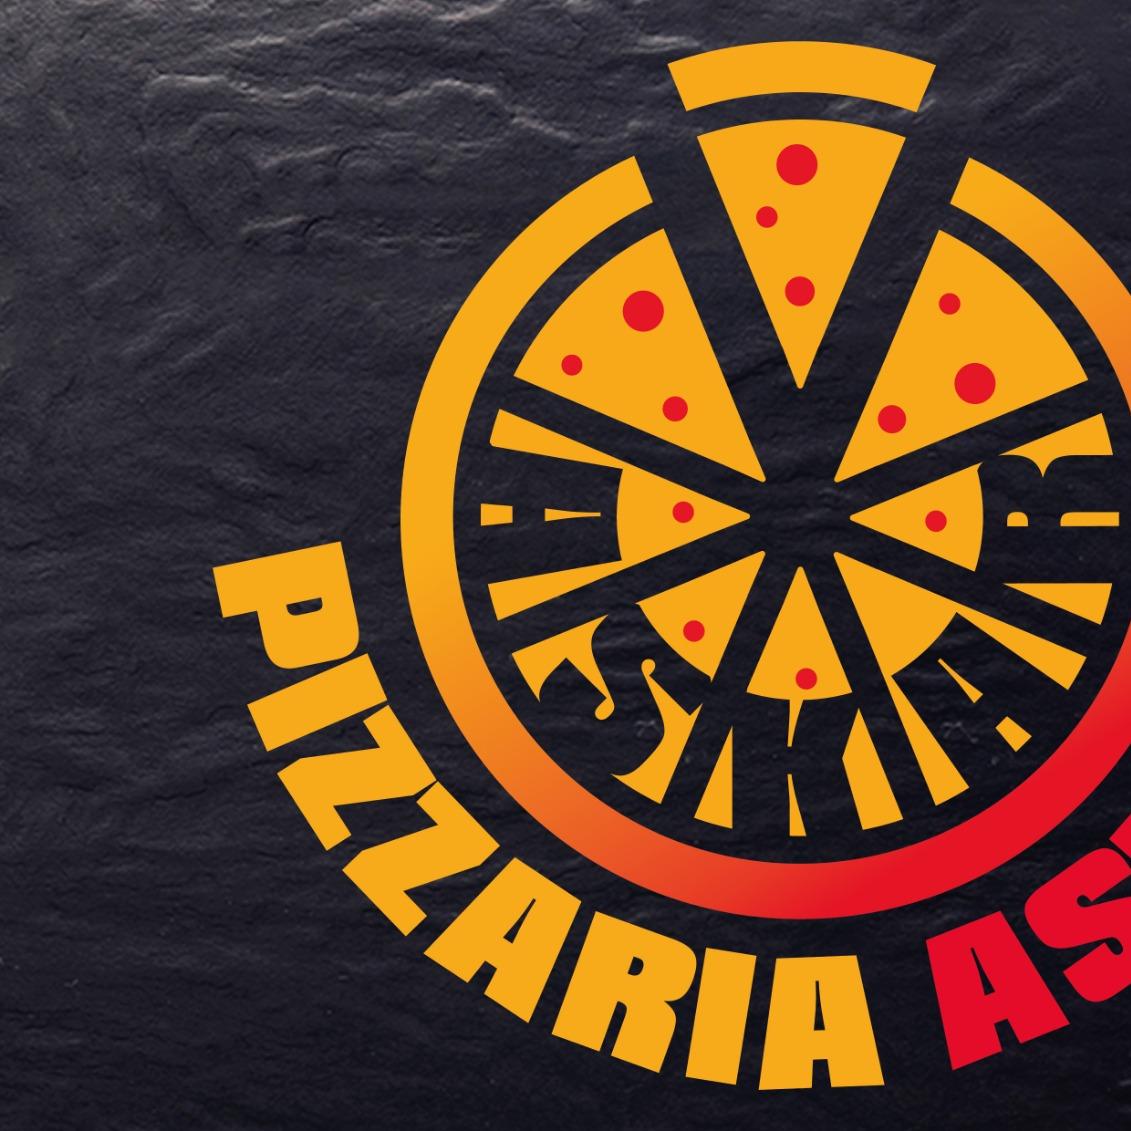 Restaurant "Pizzaria Askar" in Traisen